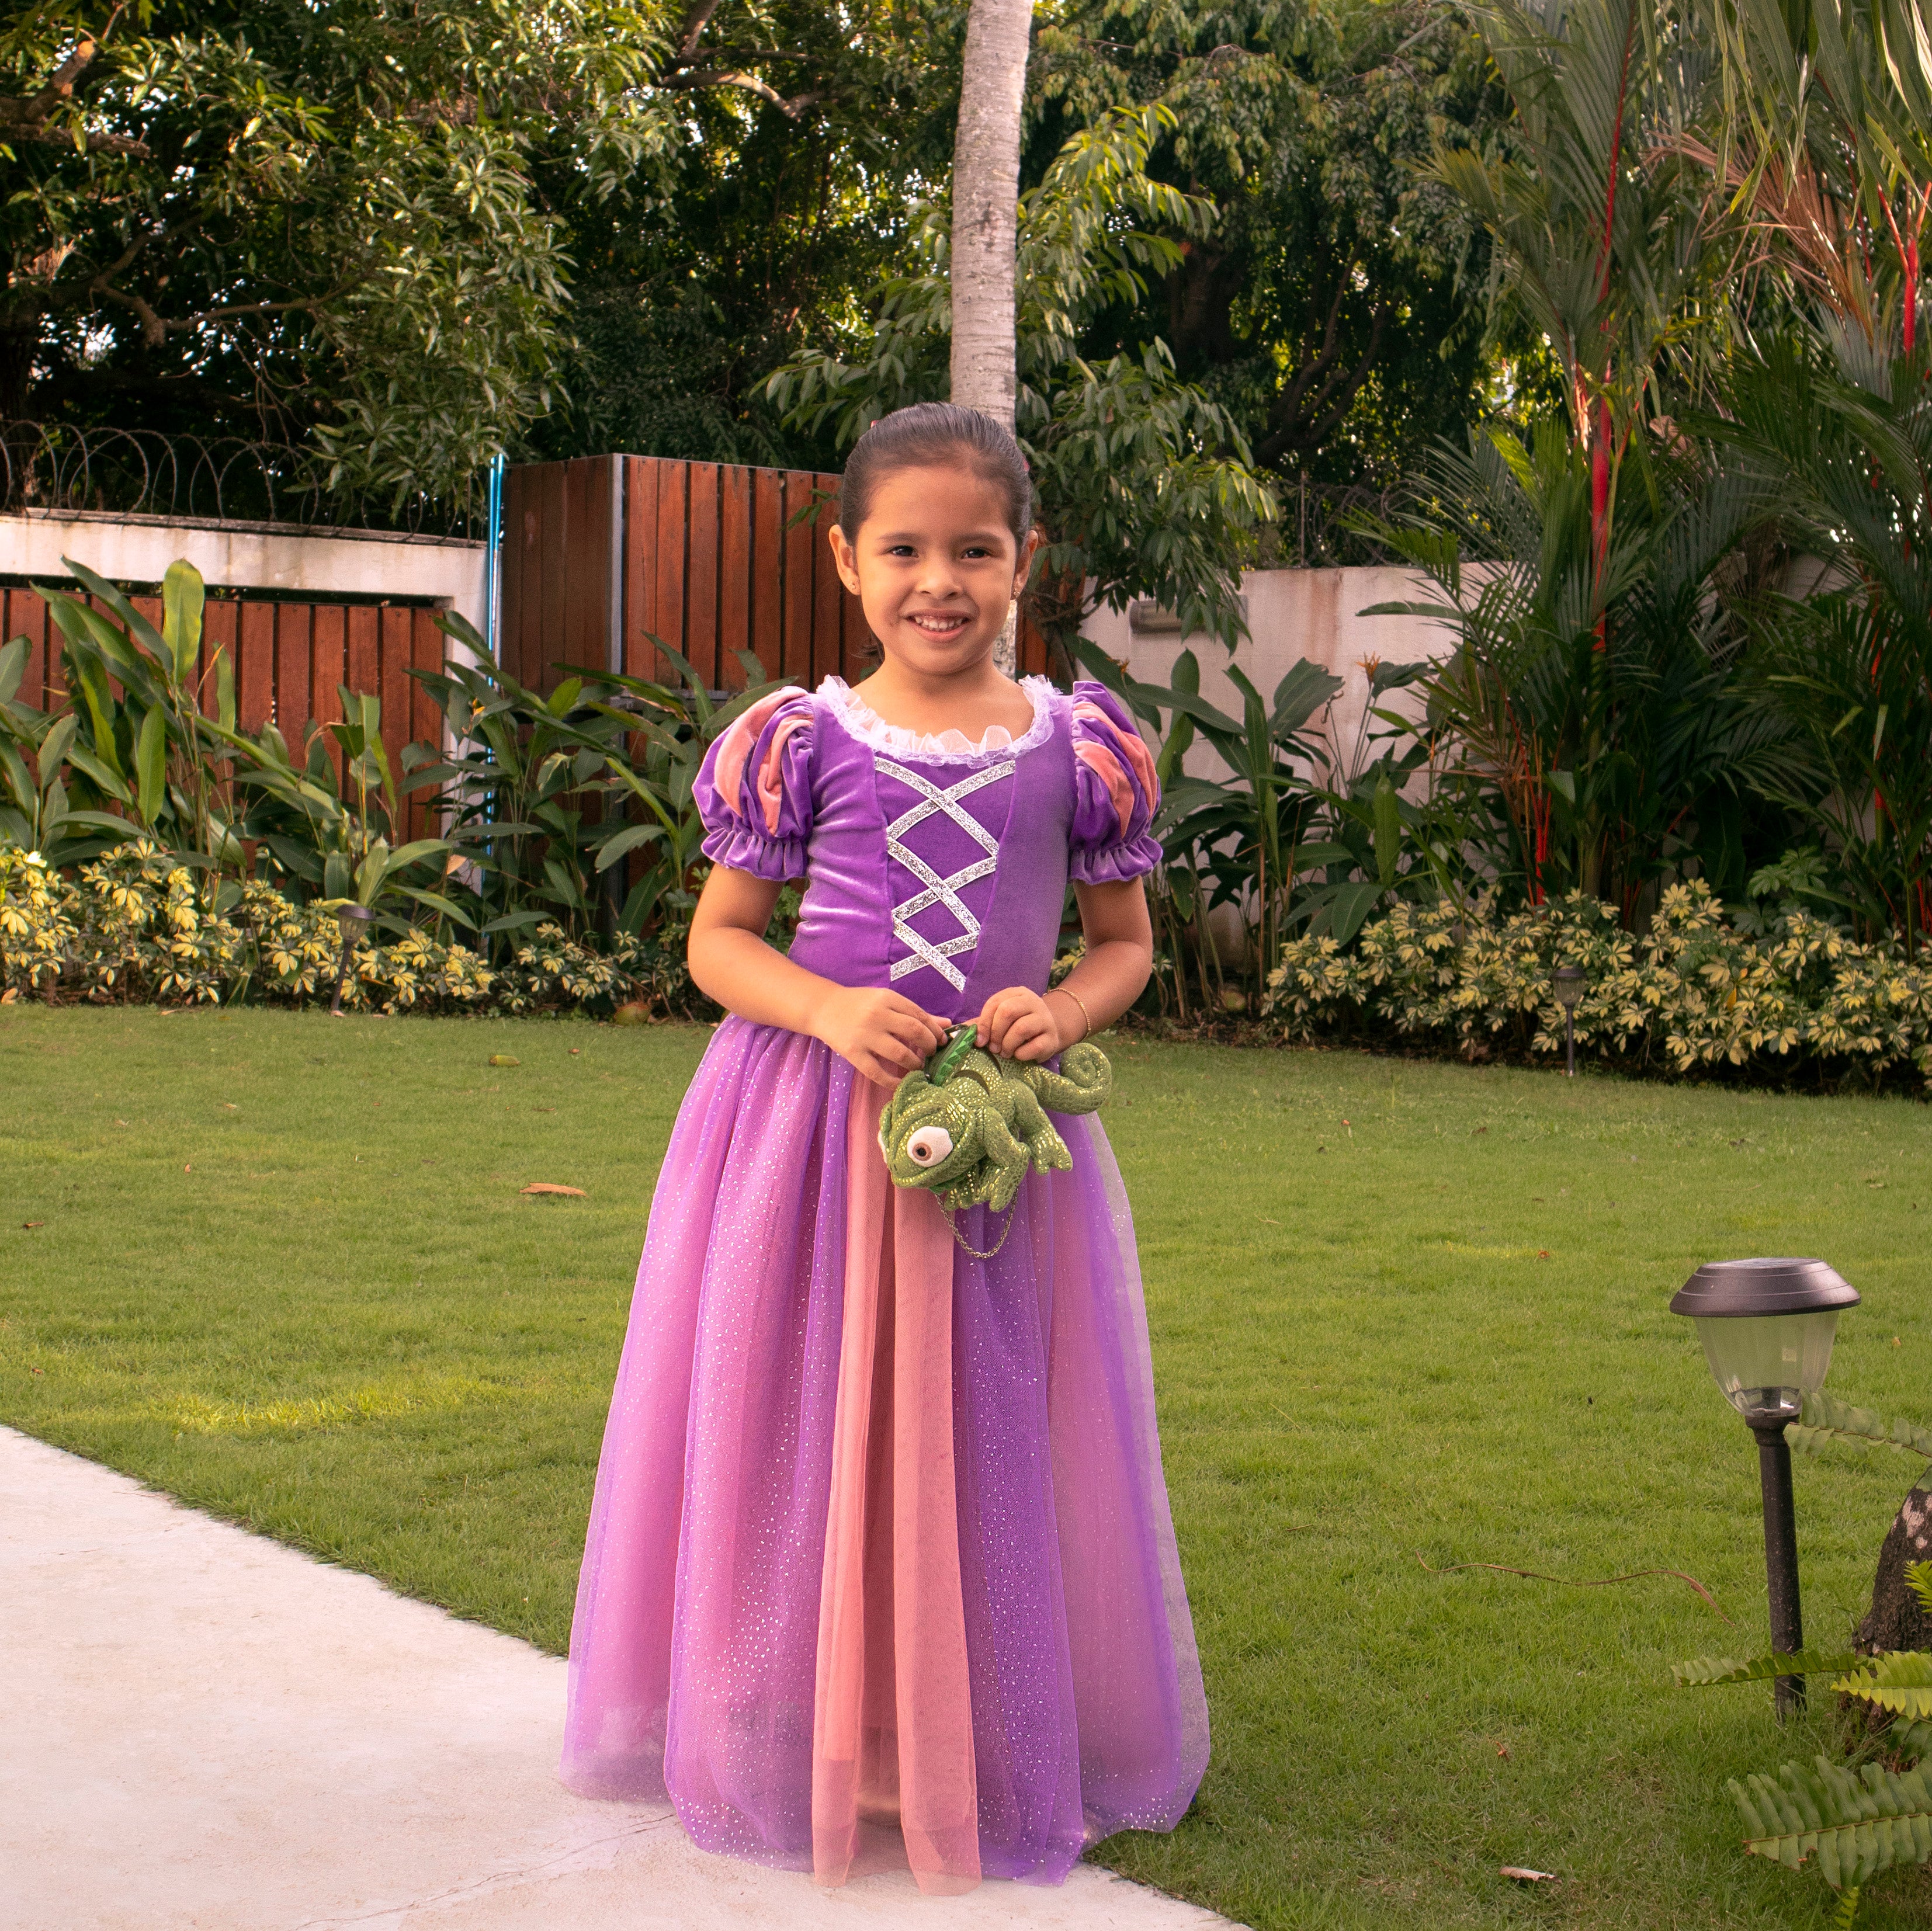 disney princess purple dress